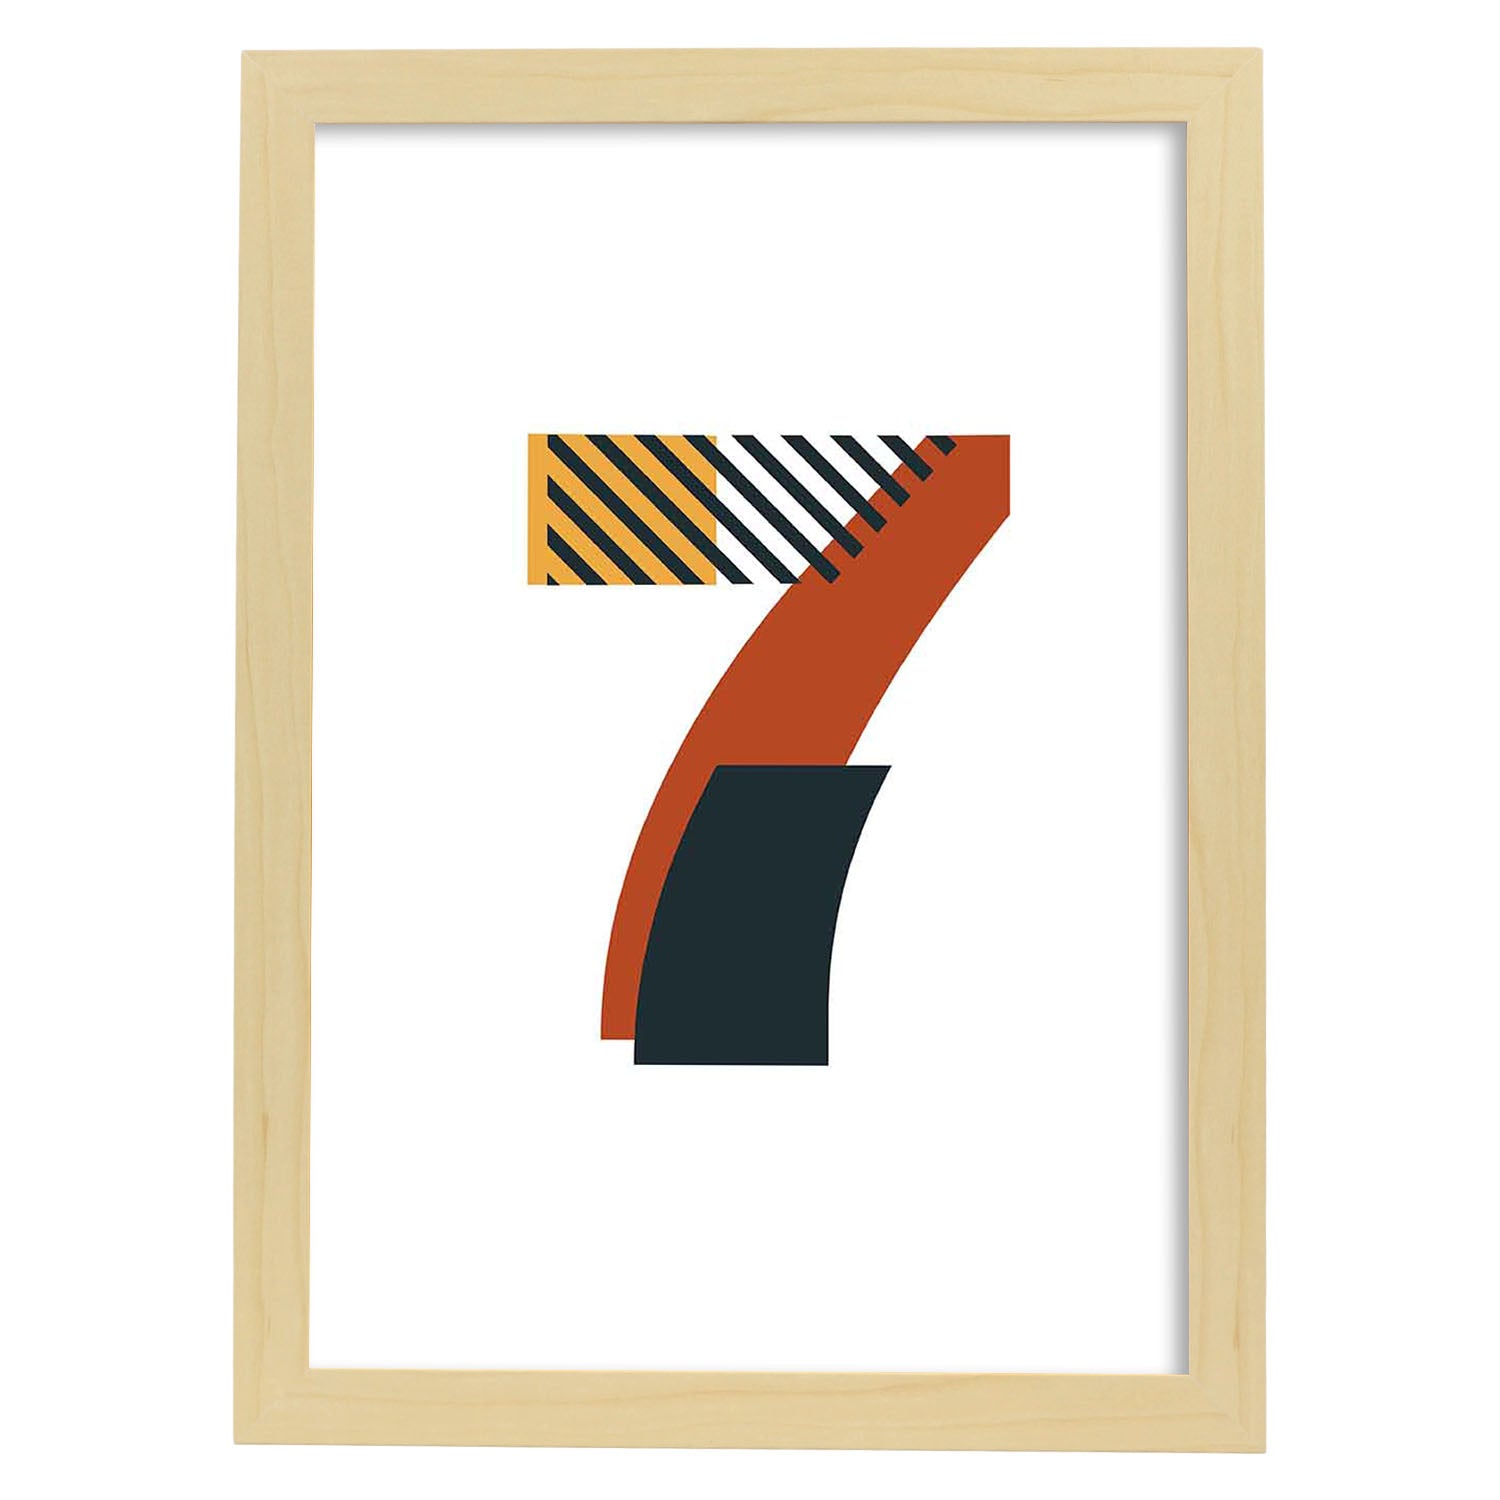 Poster de número 7. Lámina estilo Geometria con imágenes del alfabeto.-Artwork-Nacnic-A4-Marco Madera clara-Nacnic Estudio SL